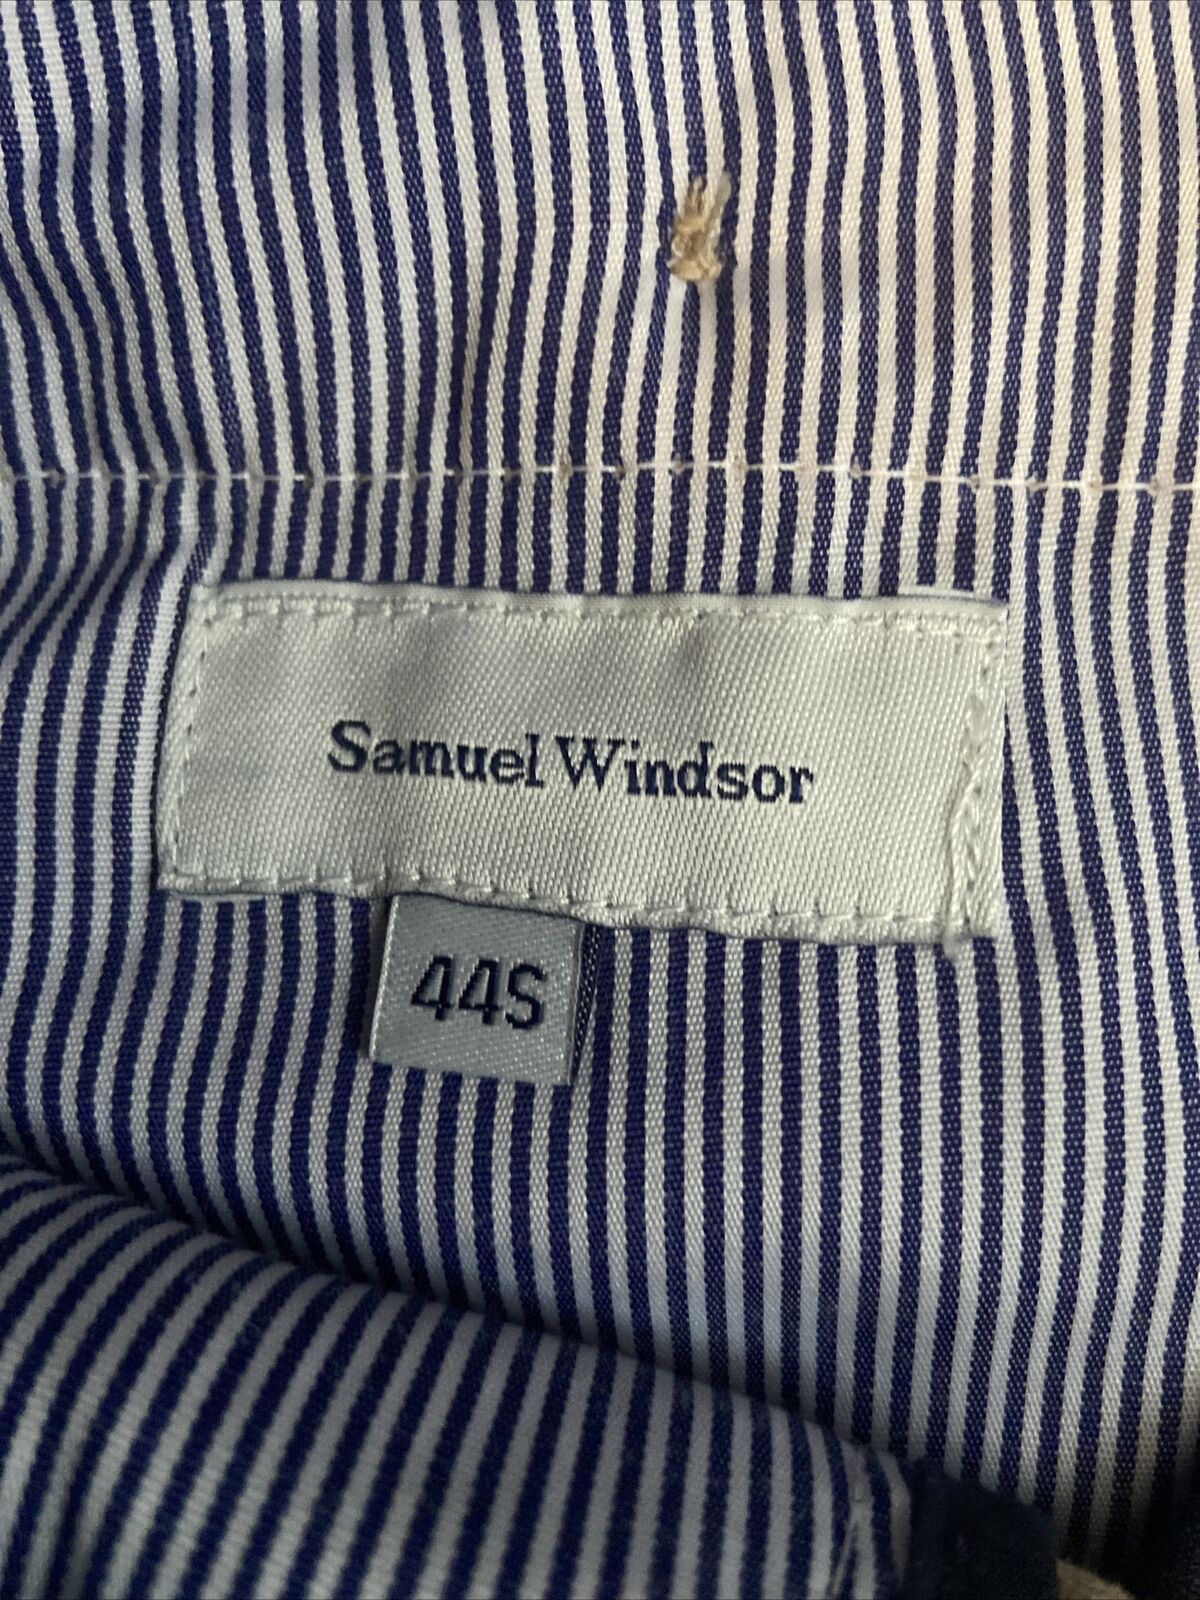 Samuel Windsor Sand Beige Cord Corduroy Trousers Size W44 L29 Brand New ...